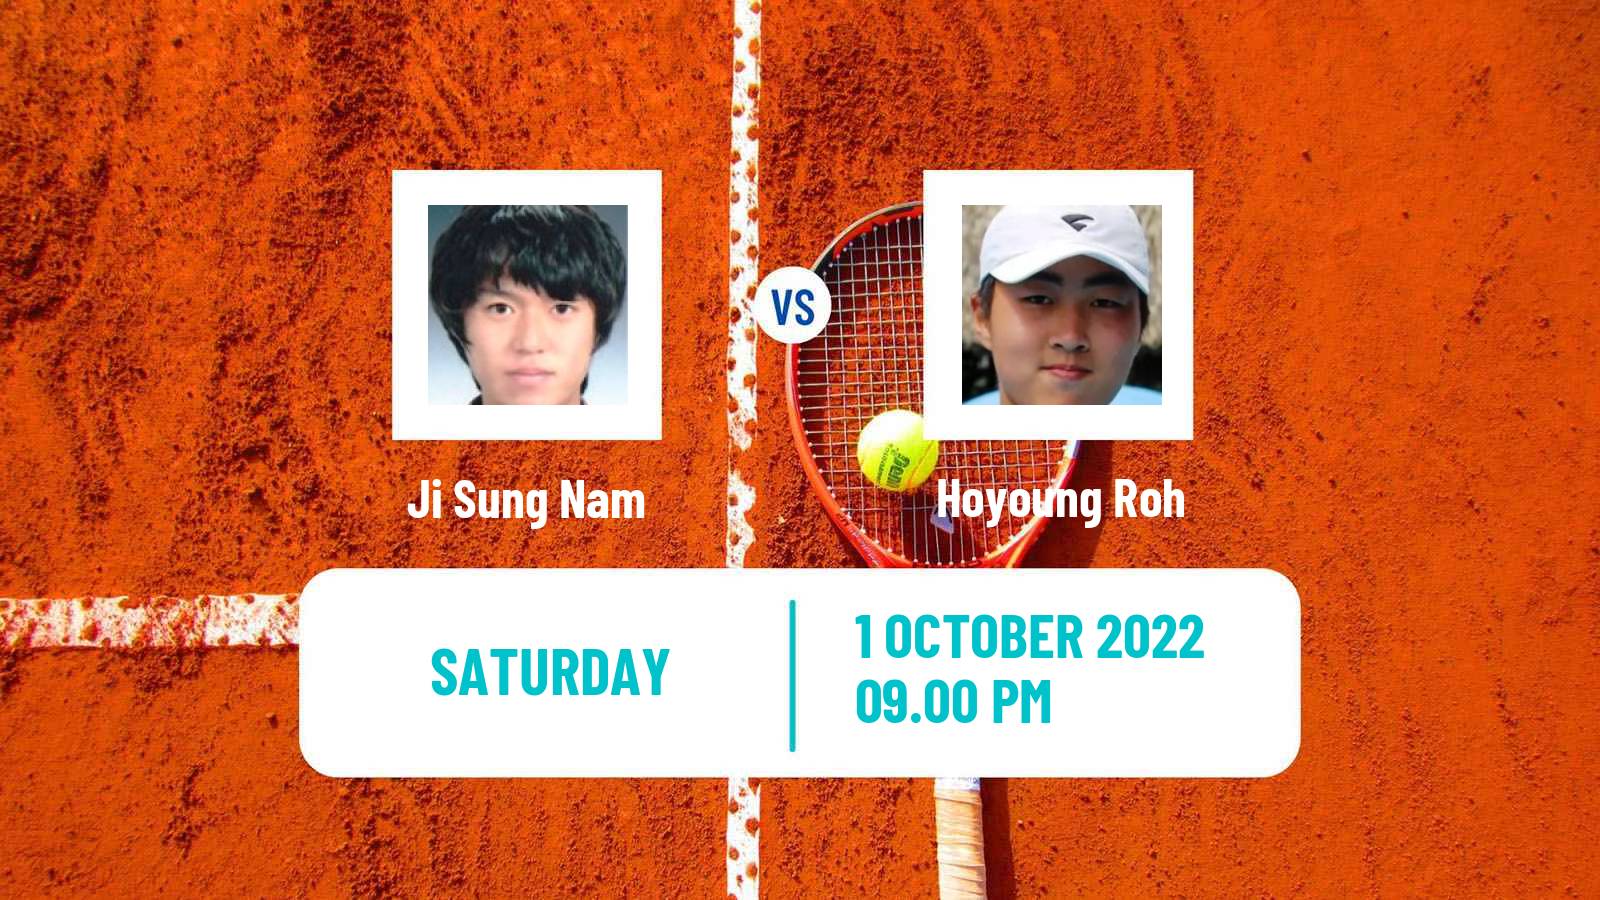 Tennis ATP Challenger Ji Sung Nam - Hoyoung Roh